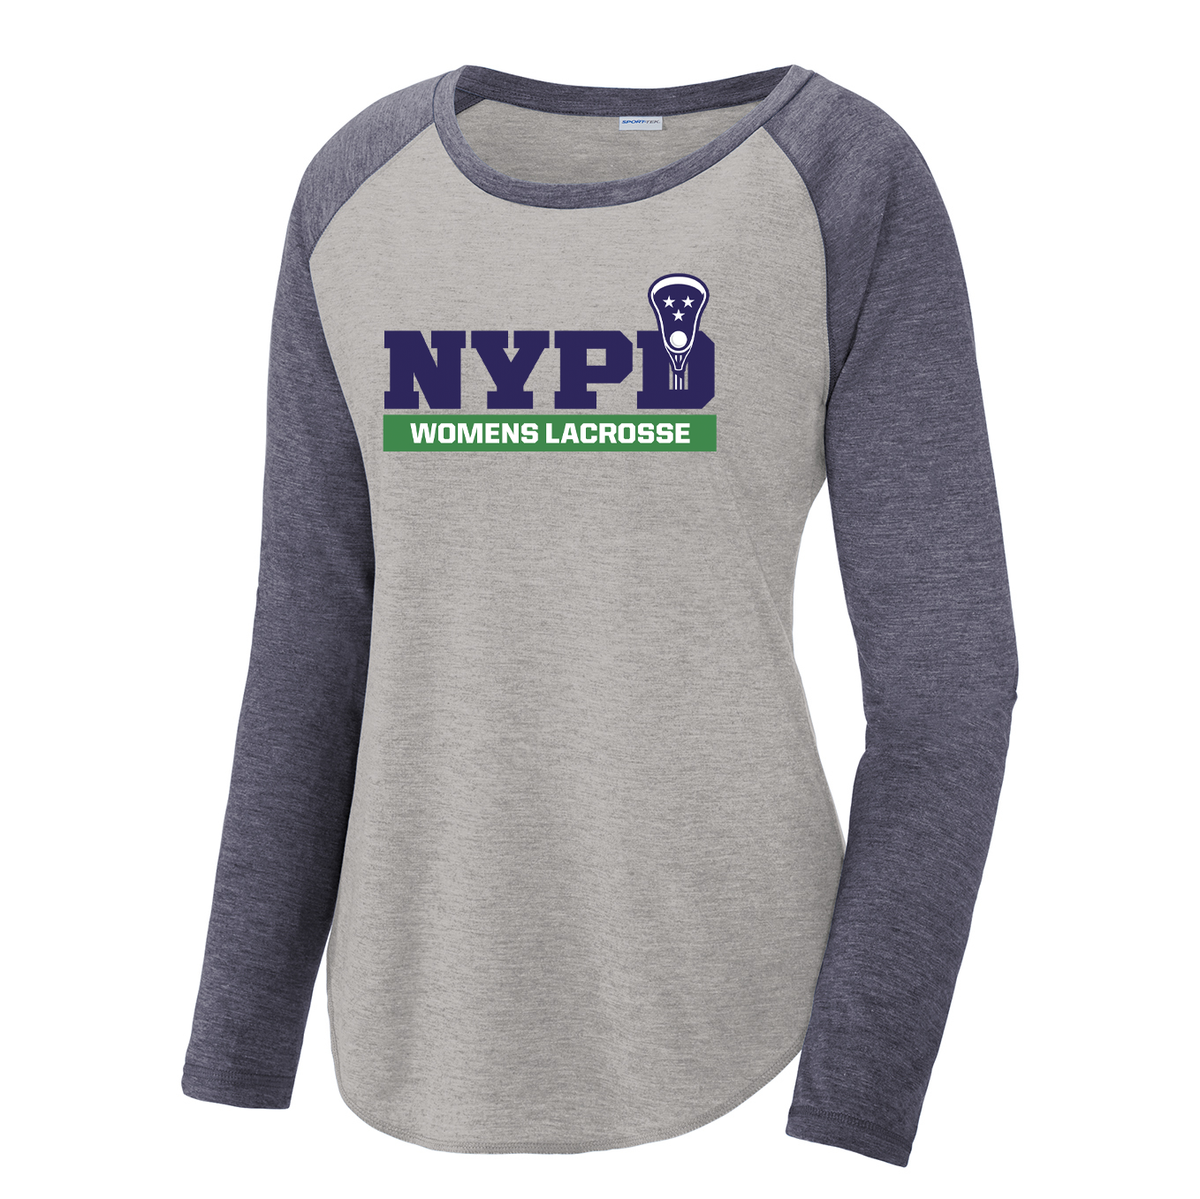 NYPD Womens Lacrosse Women's Raglan Long Sleeve CottonTouch